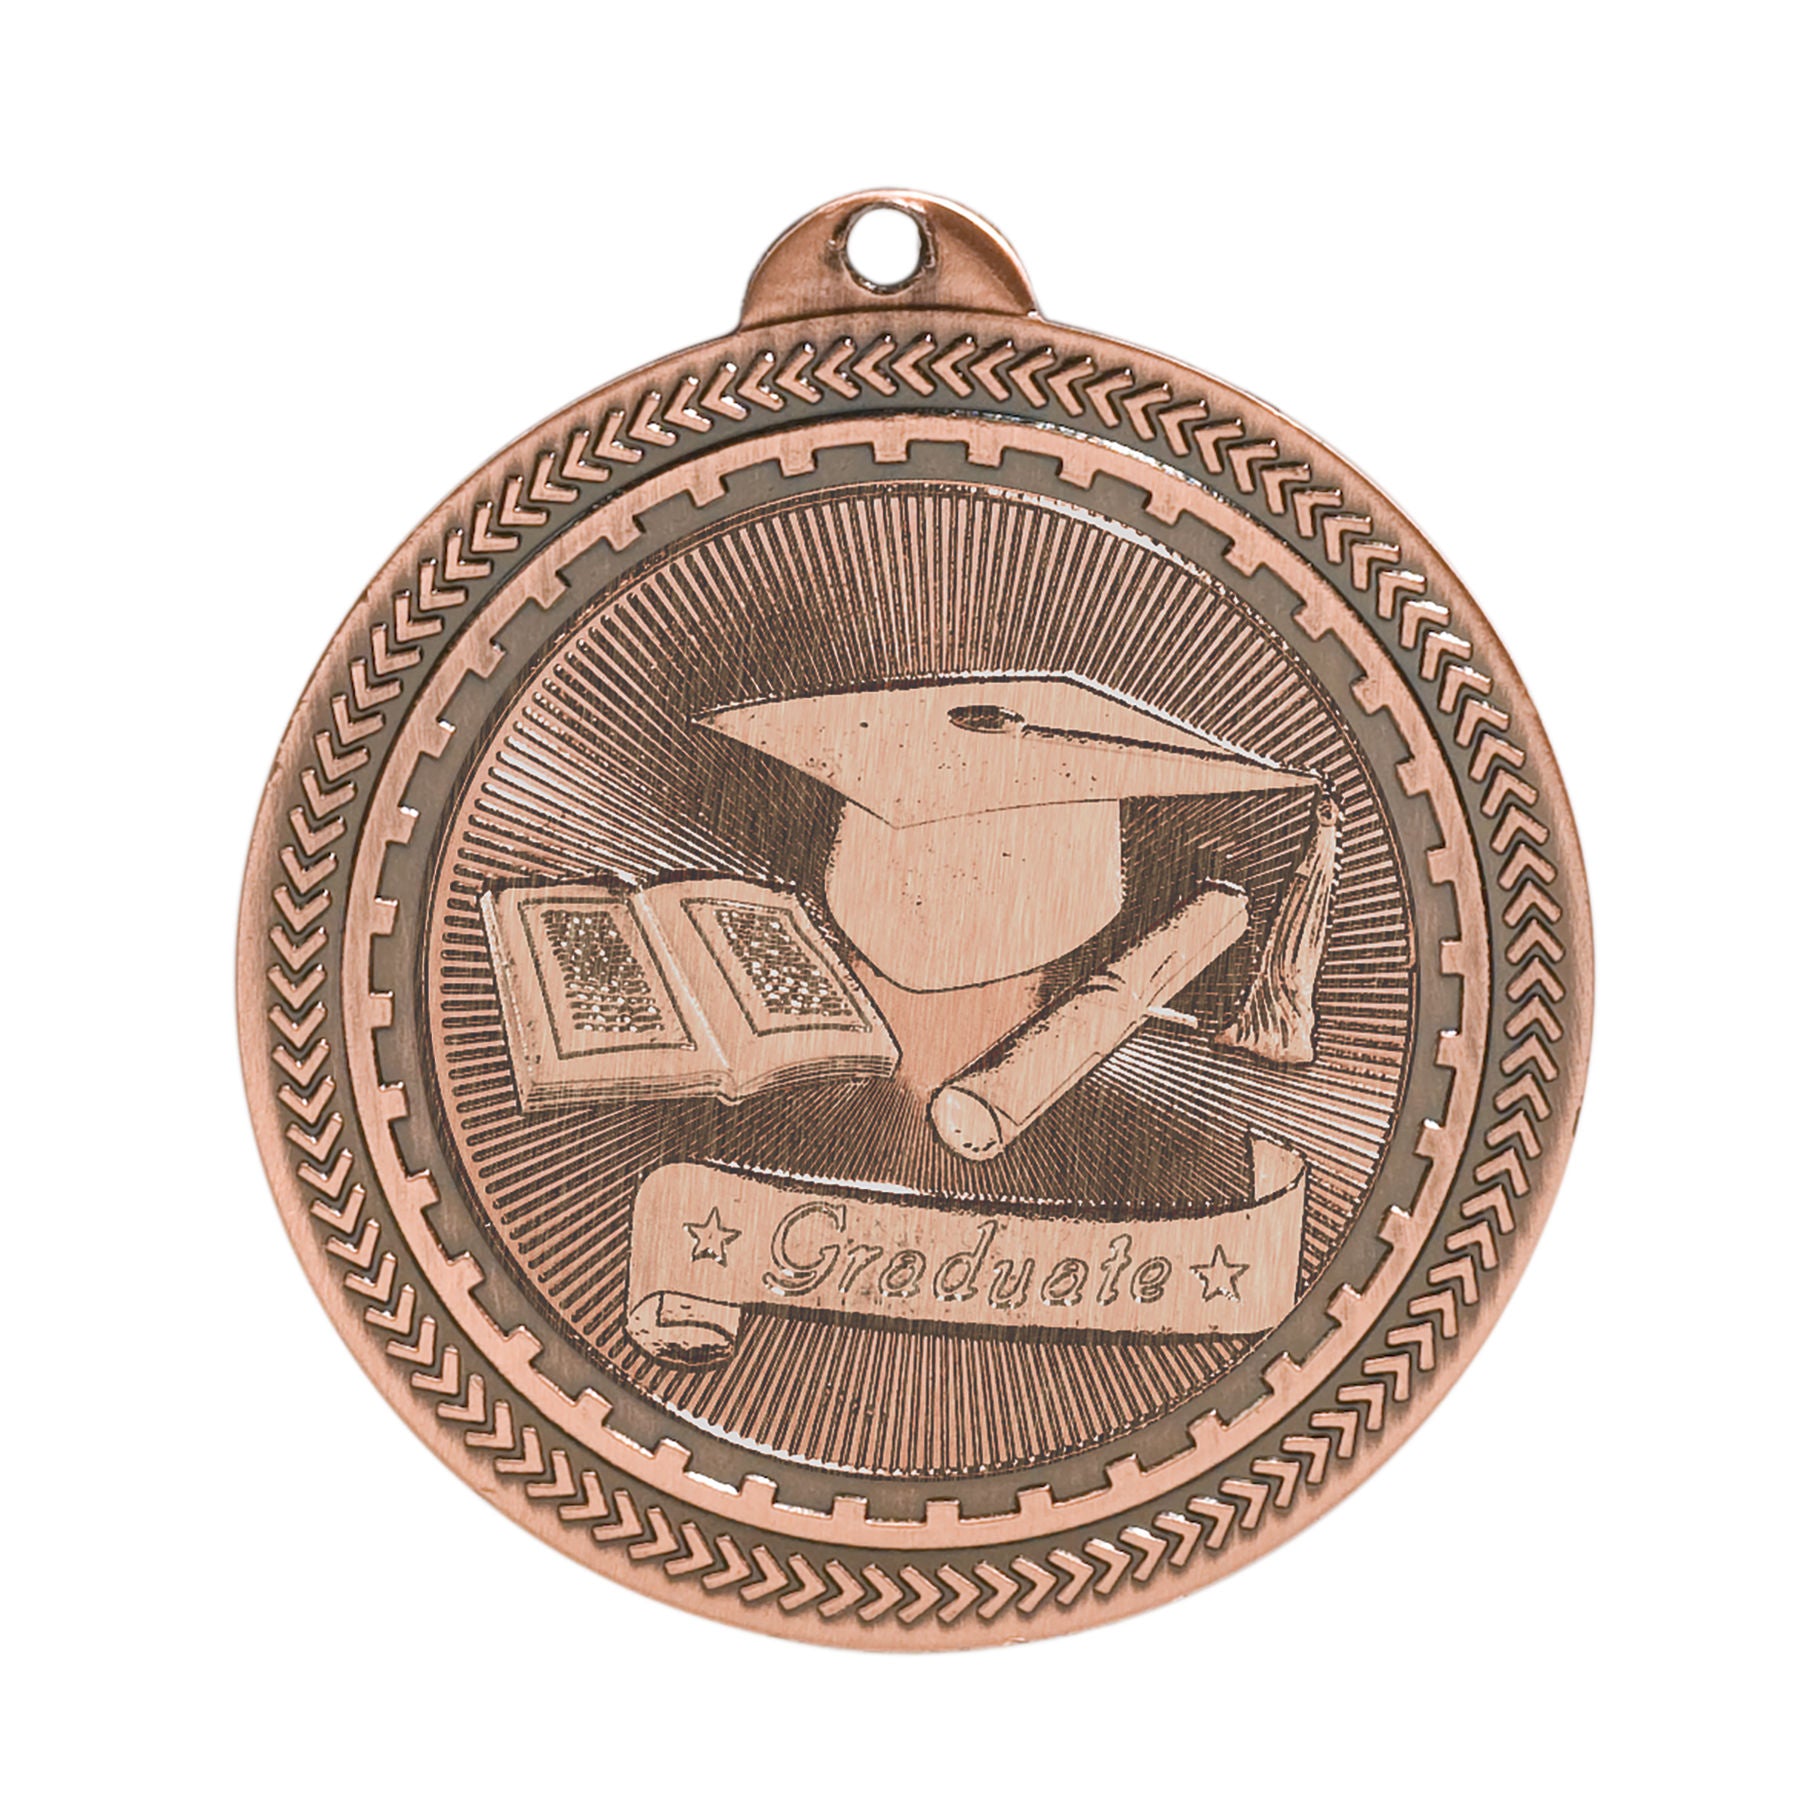 Graduate Laserable BriteLazer Medal, 2" - Craftworks NW, LLC